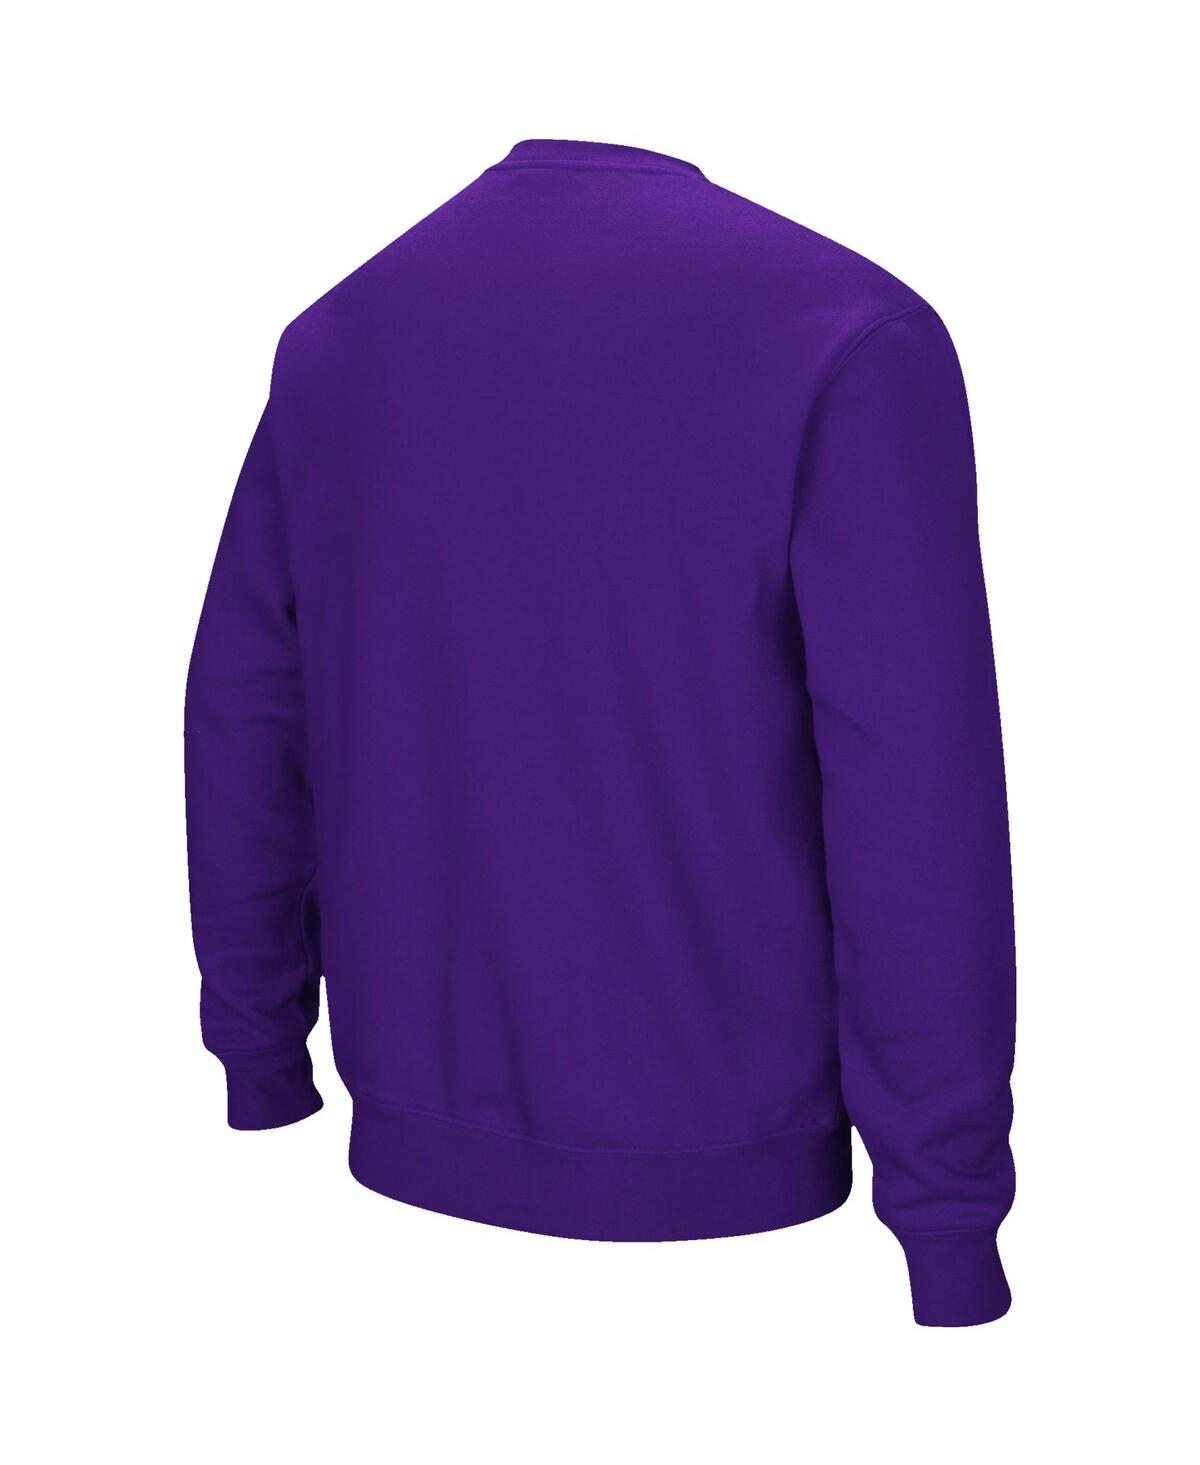 Shop Colosseum Men's  Purple Minnesota State University Mankato Arch & Logo Pullover Sweatshirt